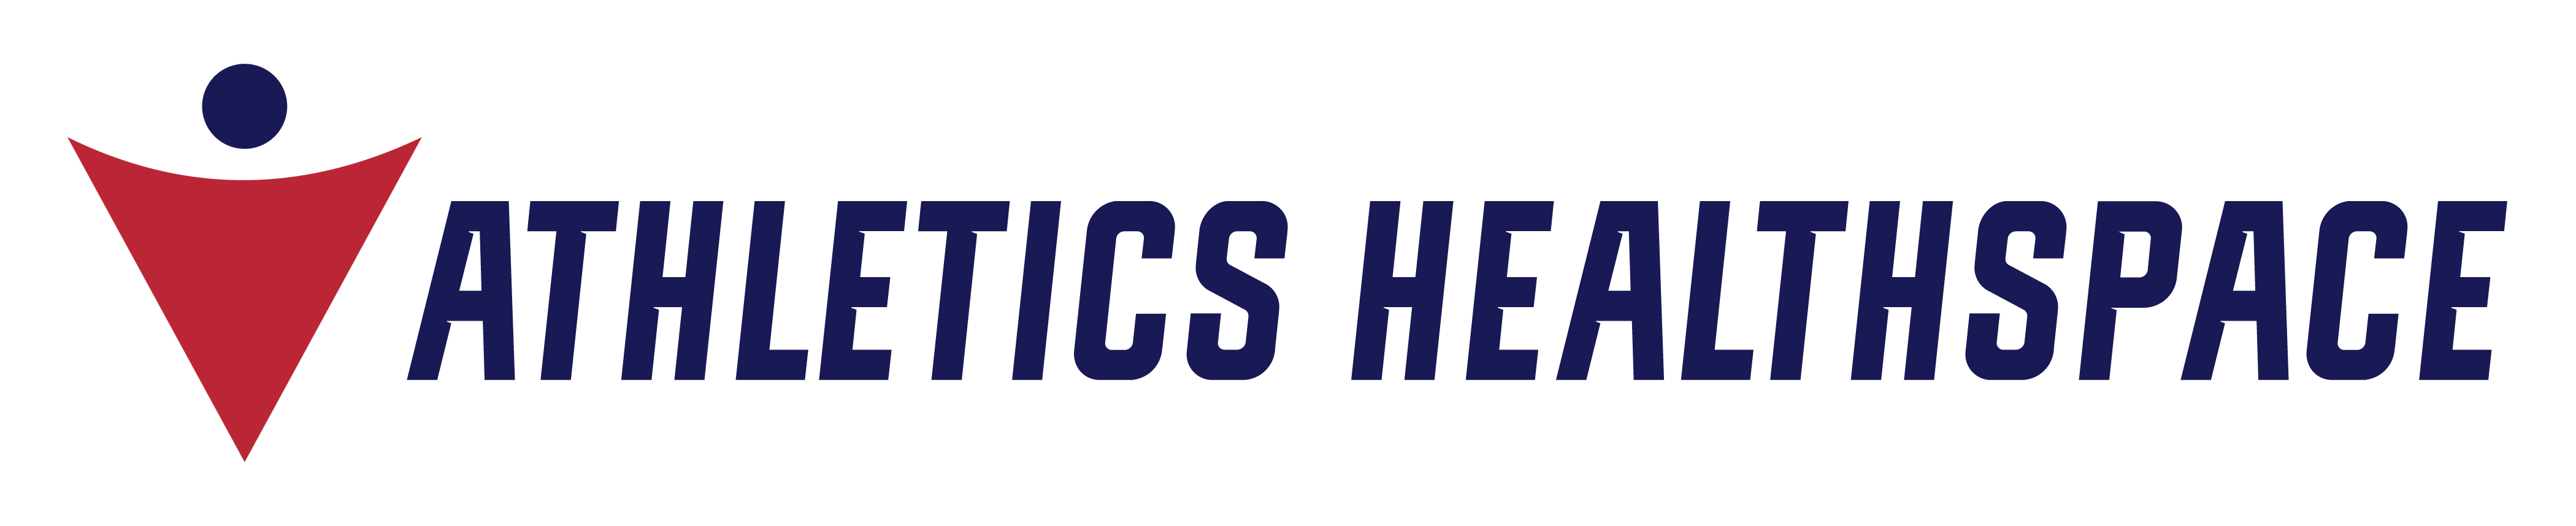 athletics-healthspace-horizontal